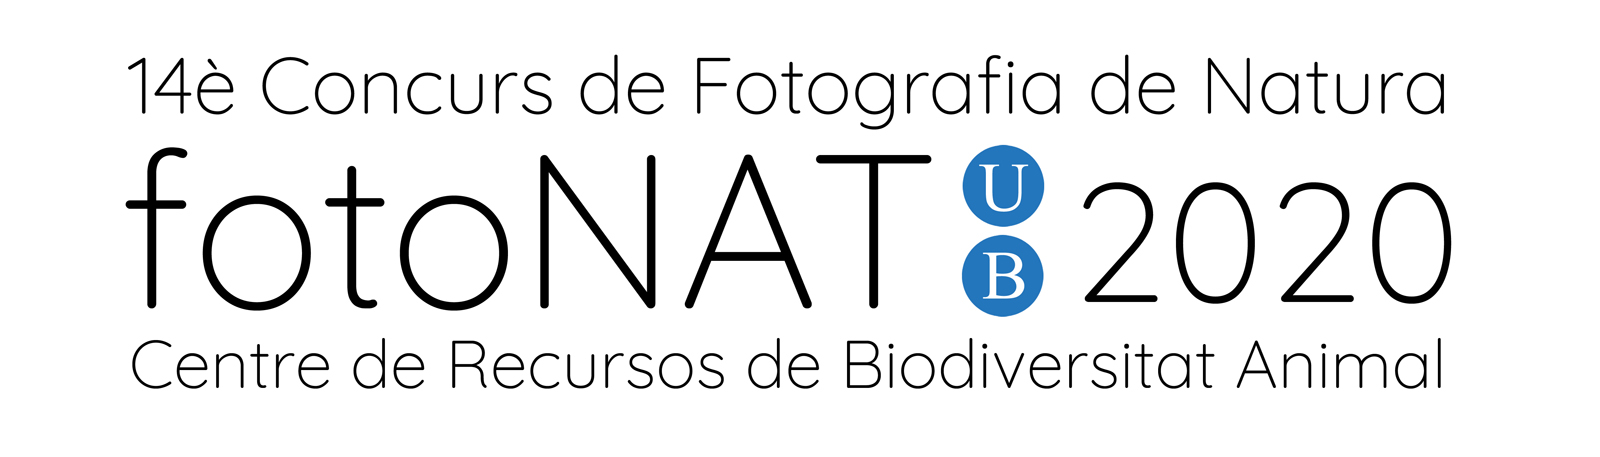 fotoNAT-UB 2020